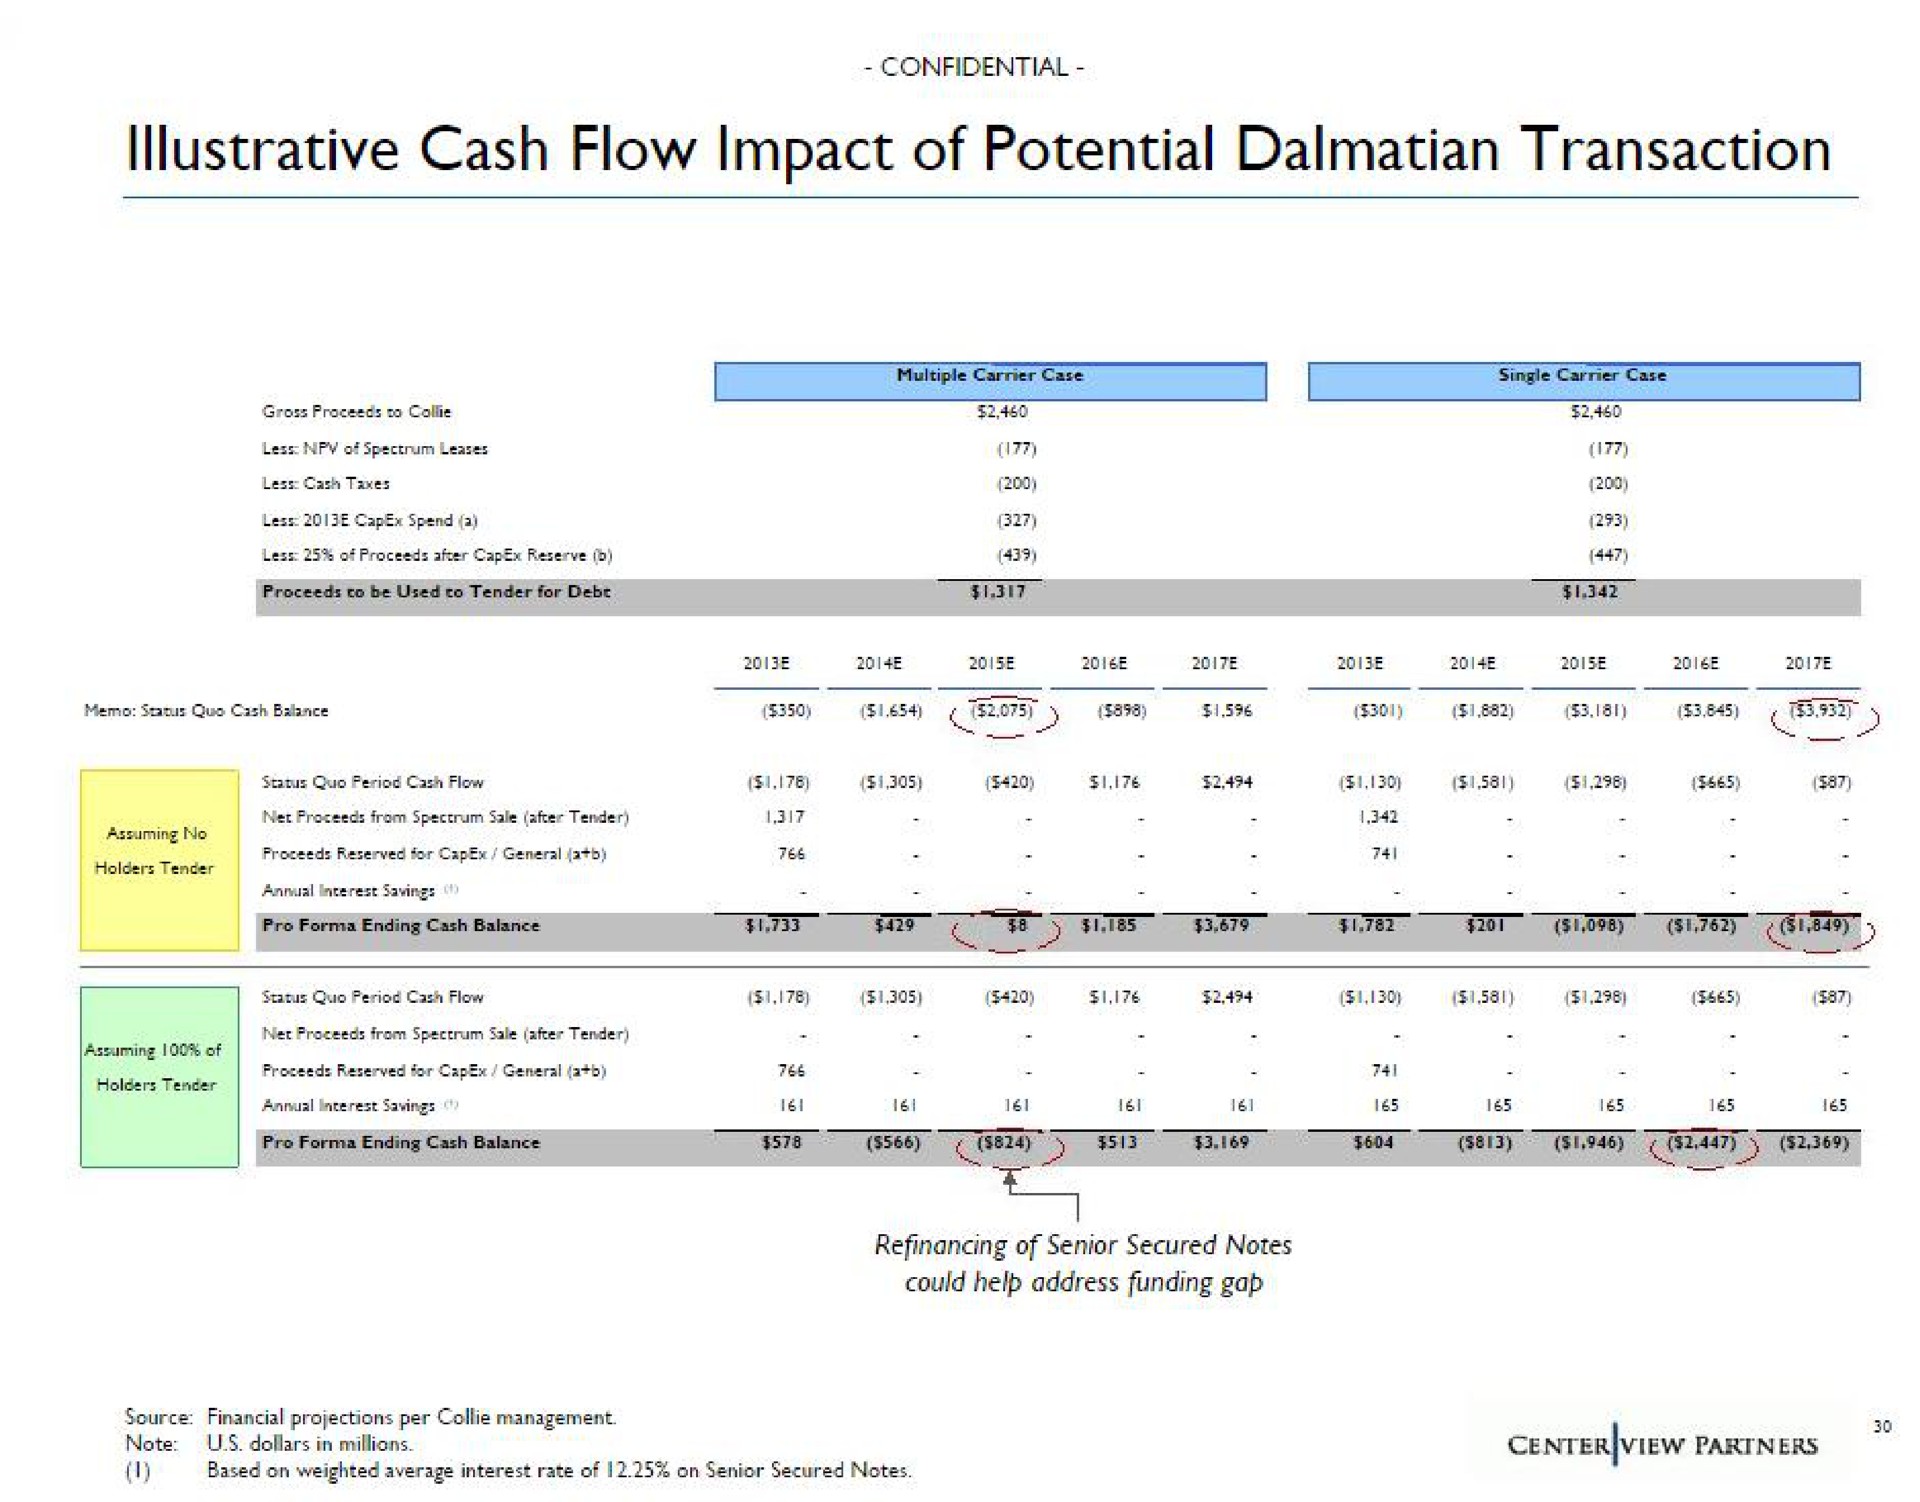 illustrative cash flow impact of potential transaction a | Centerview Partners